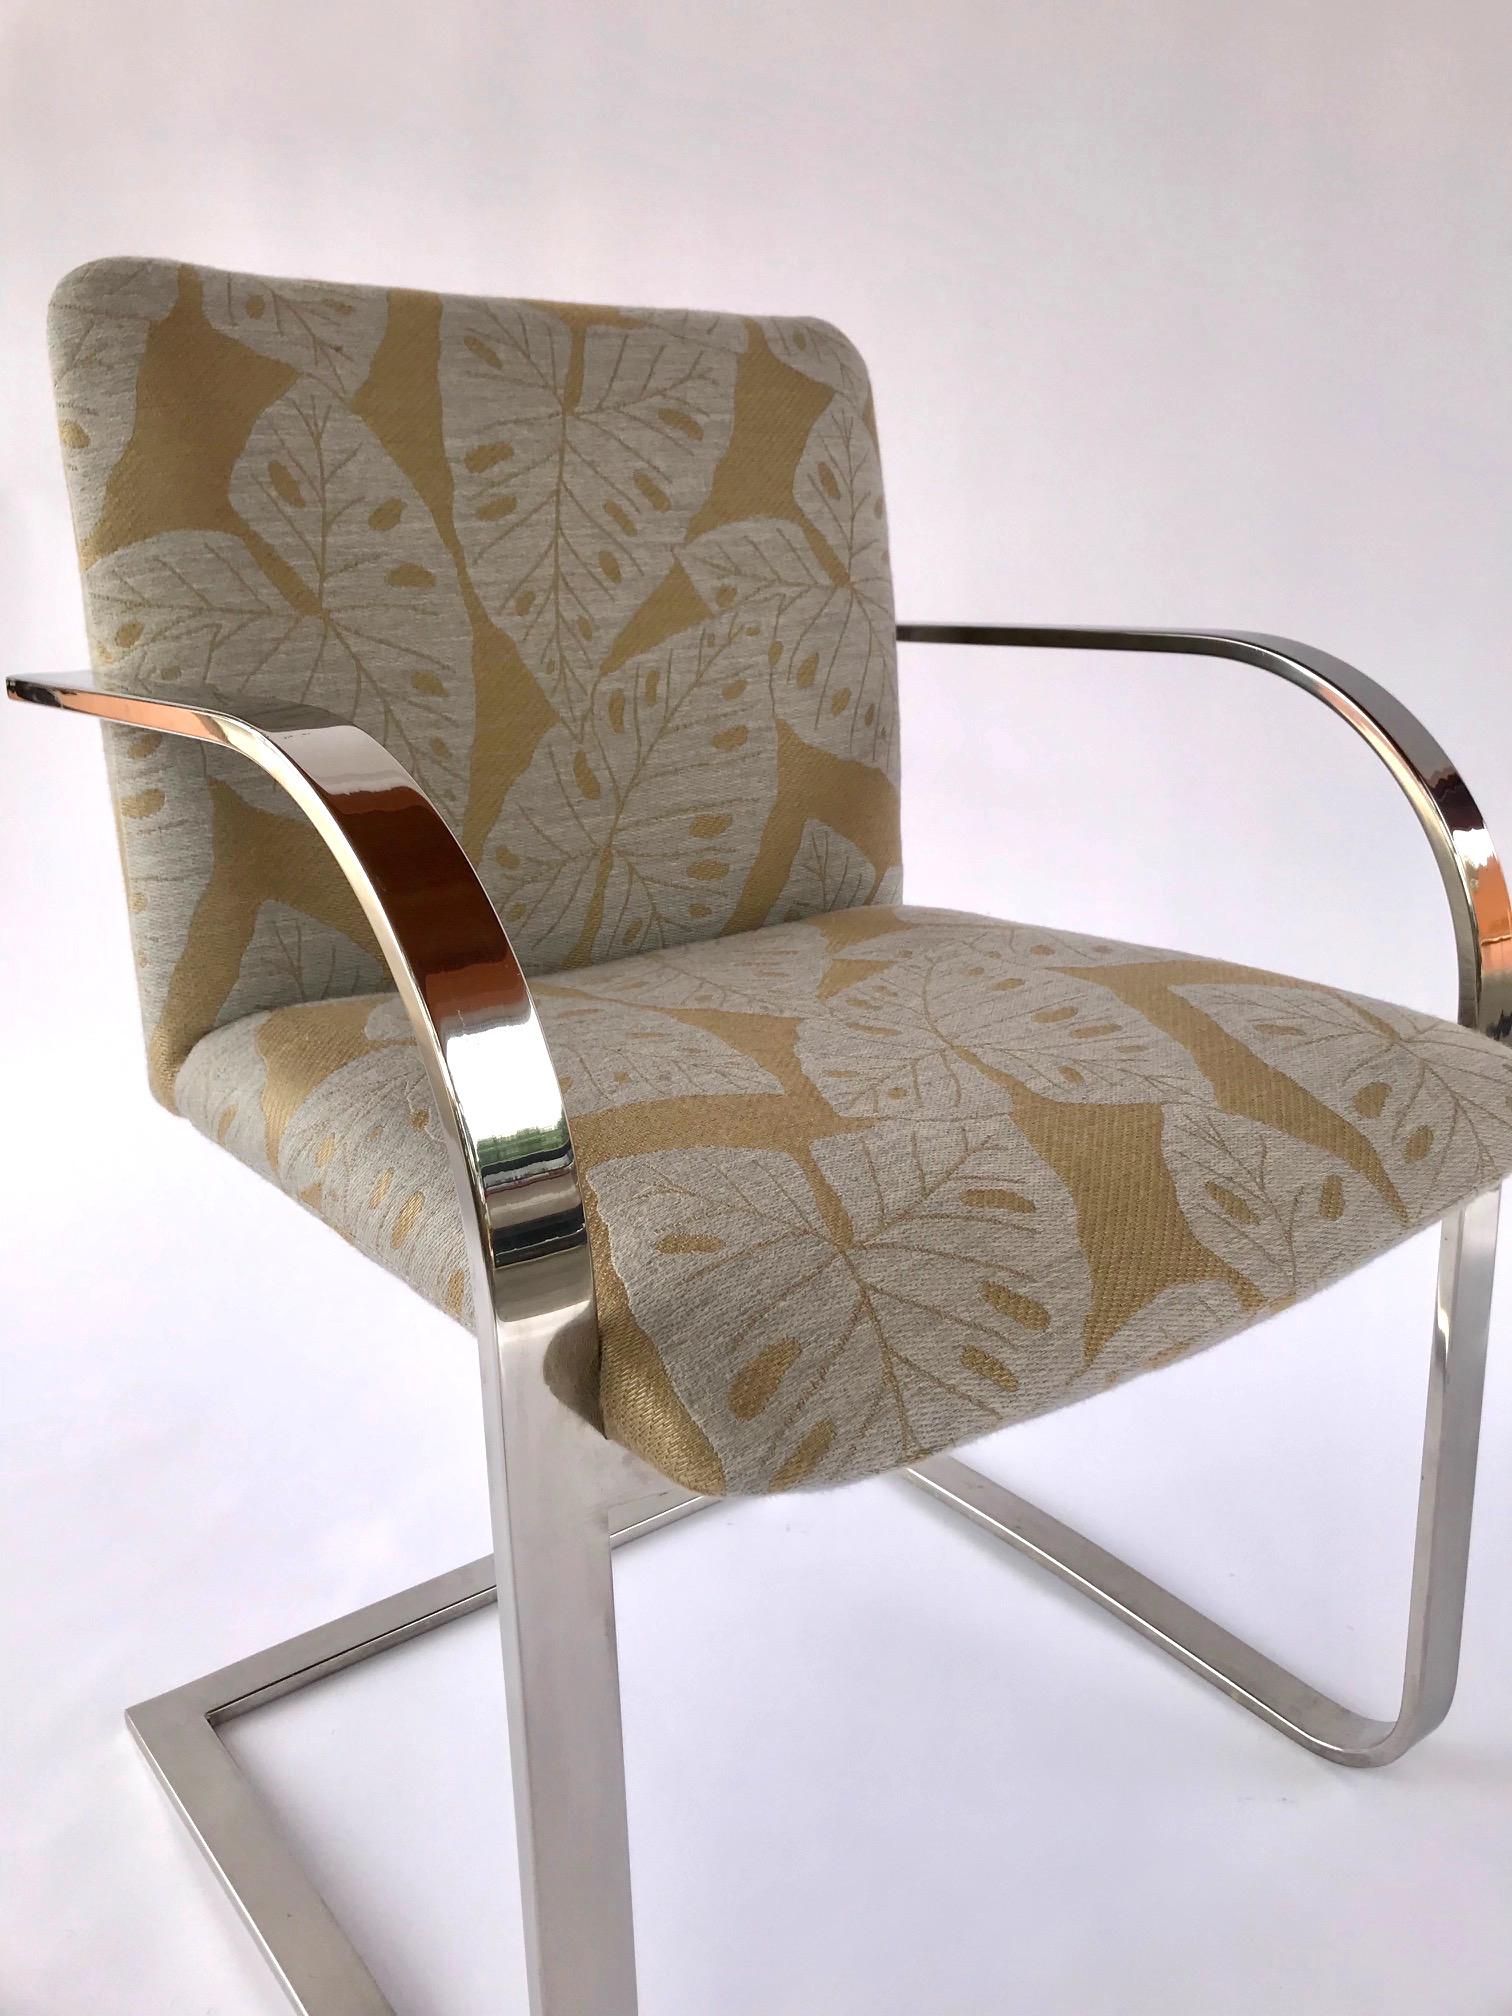 American Mid-Century Modern Chrome Desk Chair with Tropical Print by Brueton